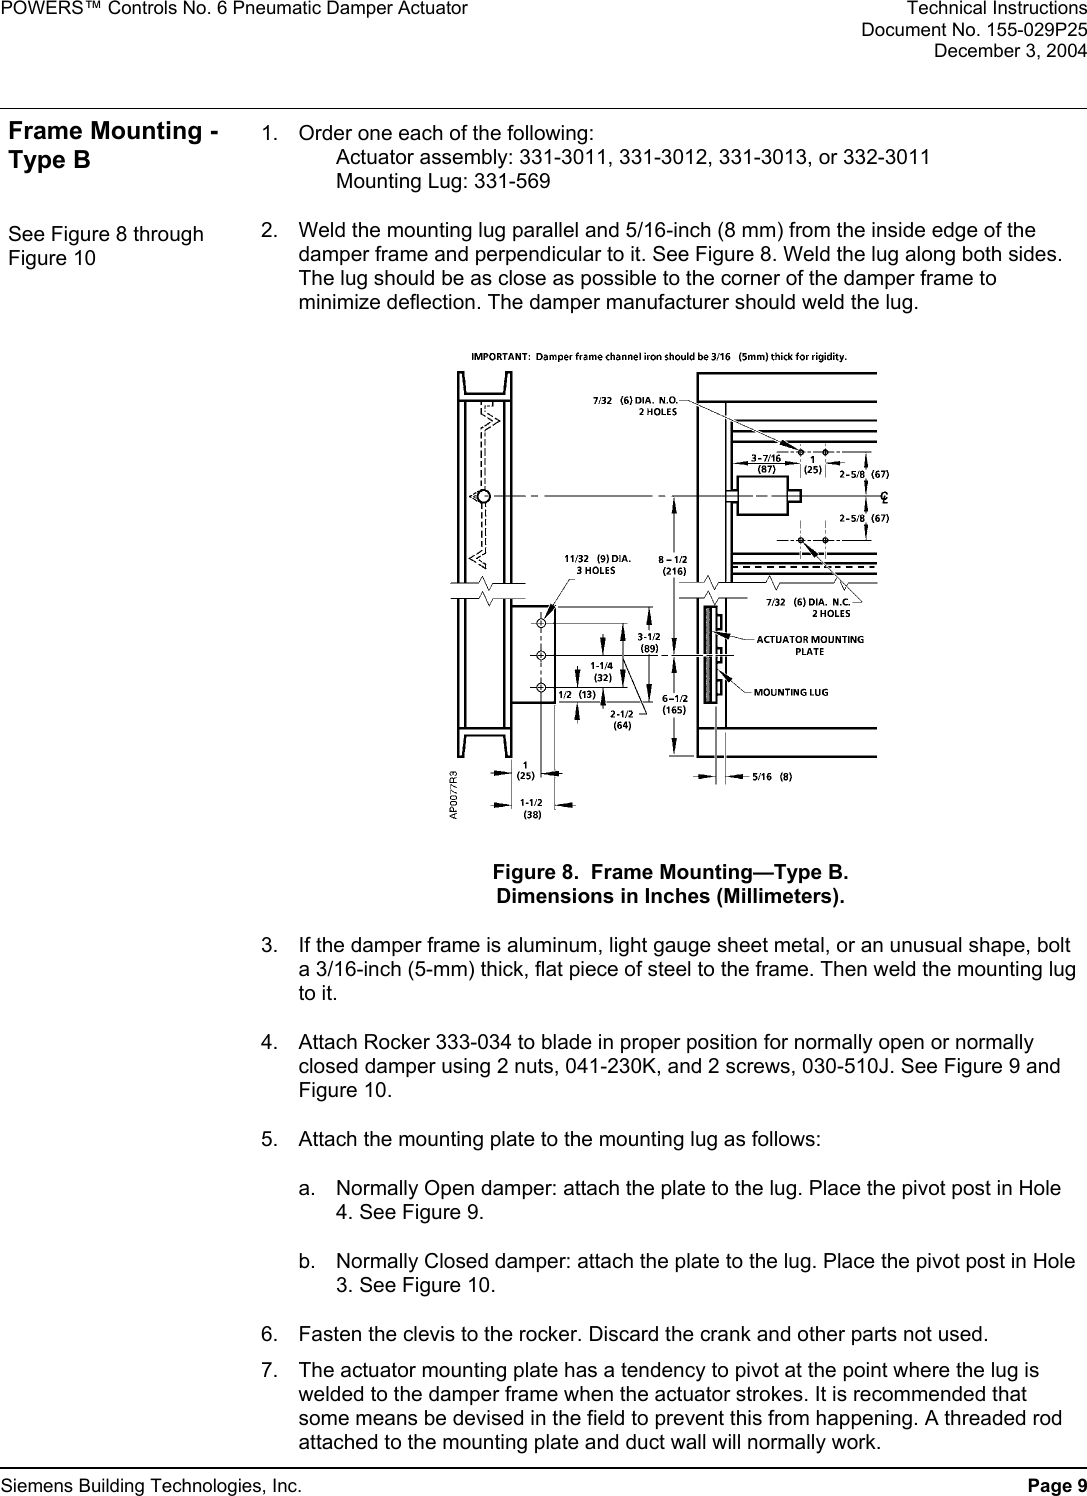 Page 9 of 12 - Siemens Siemens-331-2856-332-2856-Ap-331-3-Users-Manual- Powers Control - No. 6 Pneumatic Damper Actuator  Siemens-331-2856-332-2856-ap-331-3-users-manual